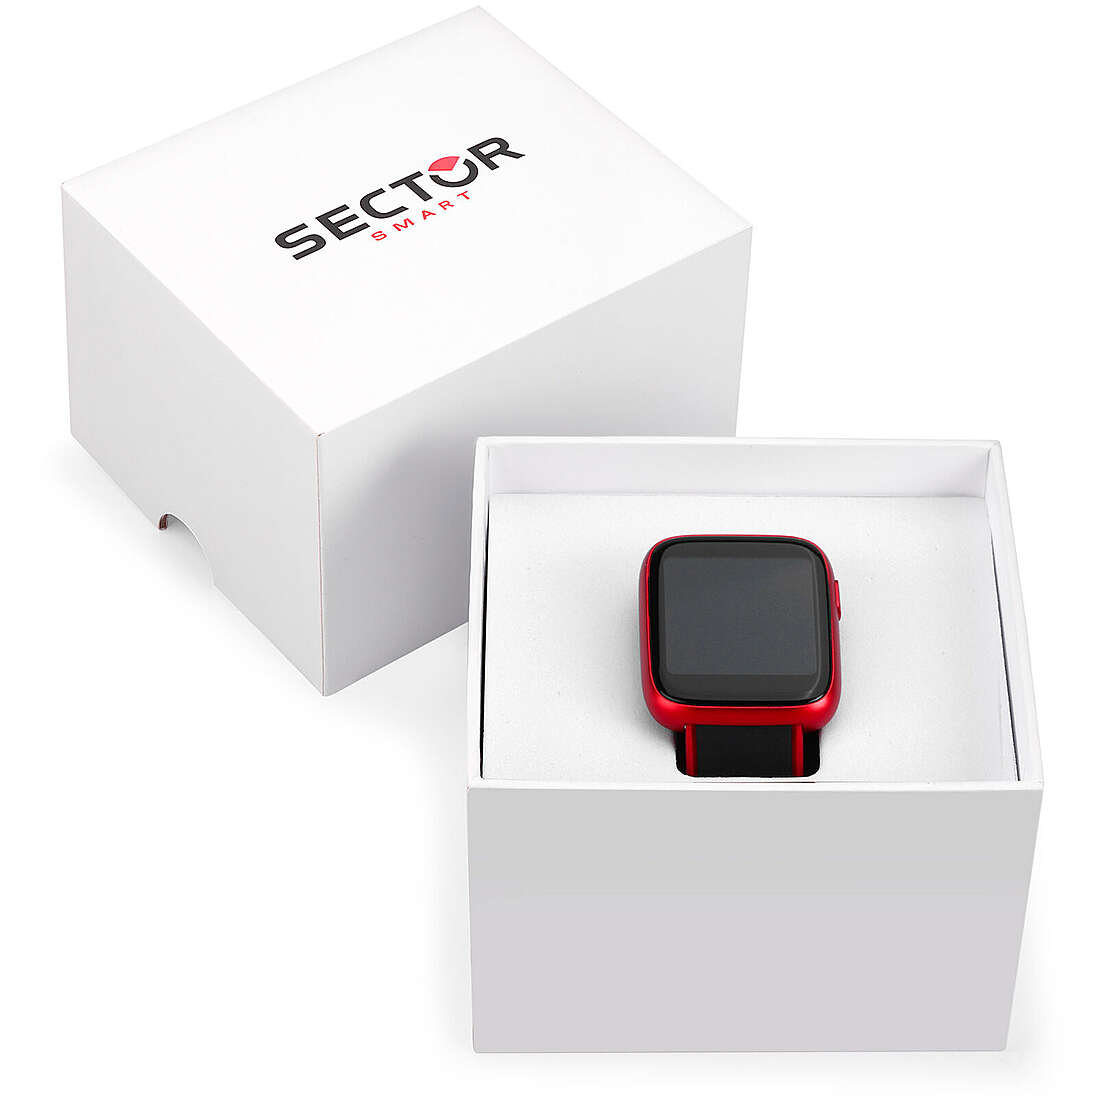 orologio Smartwatch uomo Sector S-04 Colours - R3253158008 R3253158008